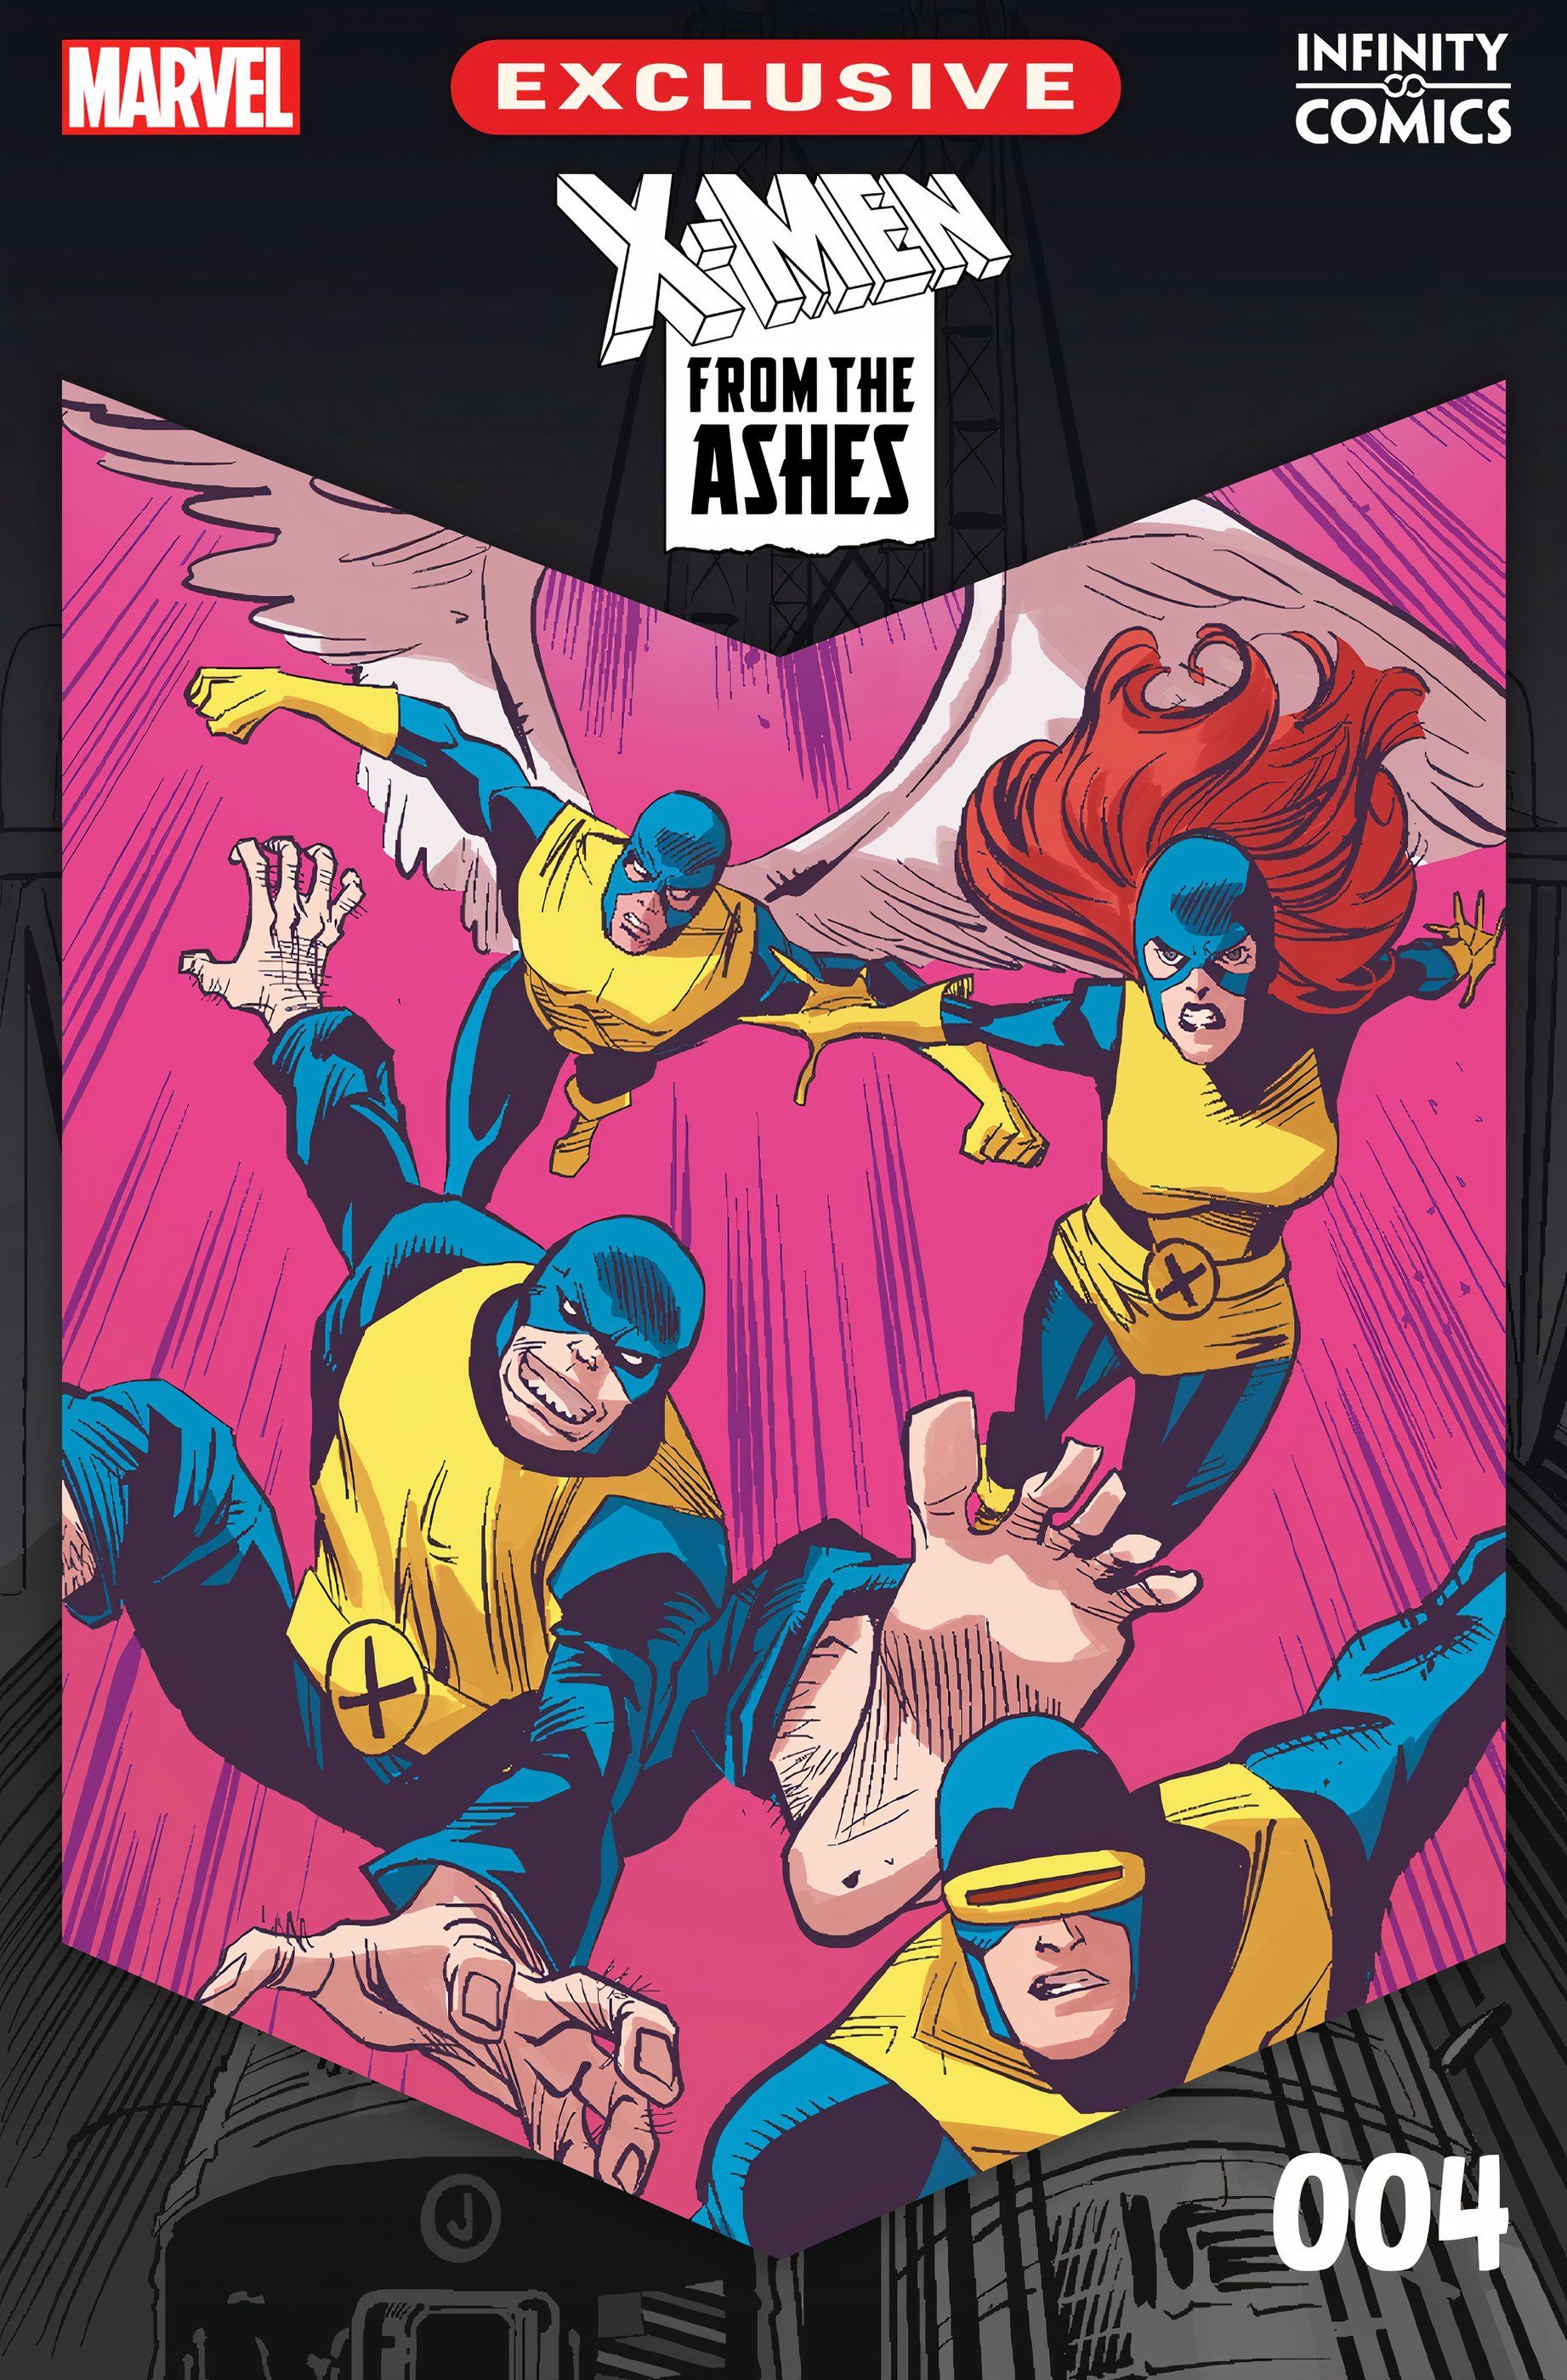 Capa da revista X-Men: From the Ashes Infinity Comic #4, apresentando os X-Men originais.